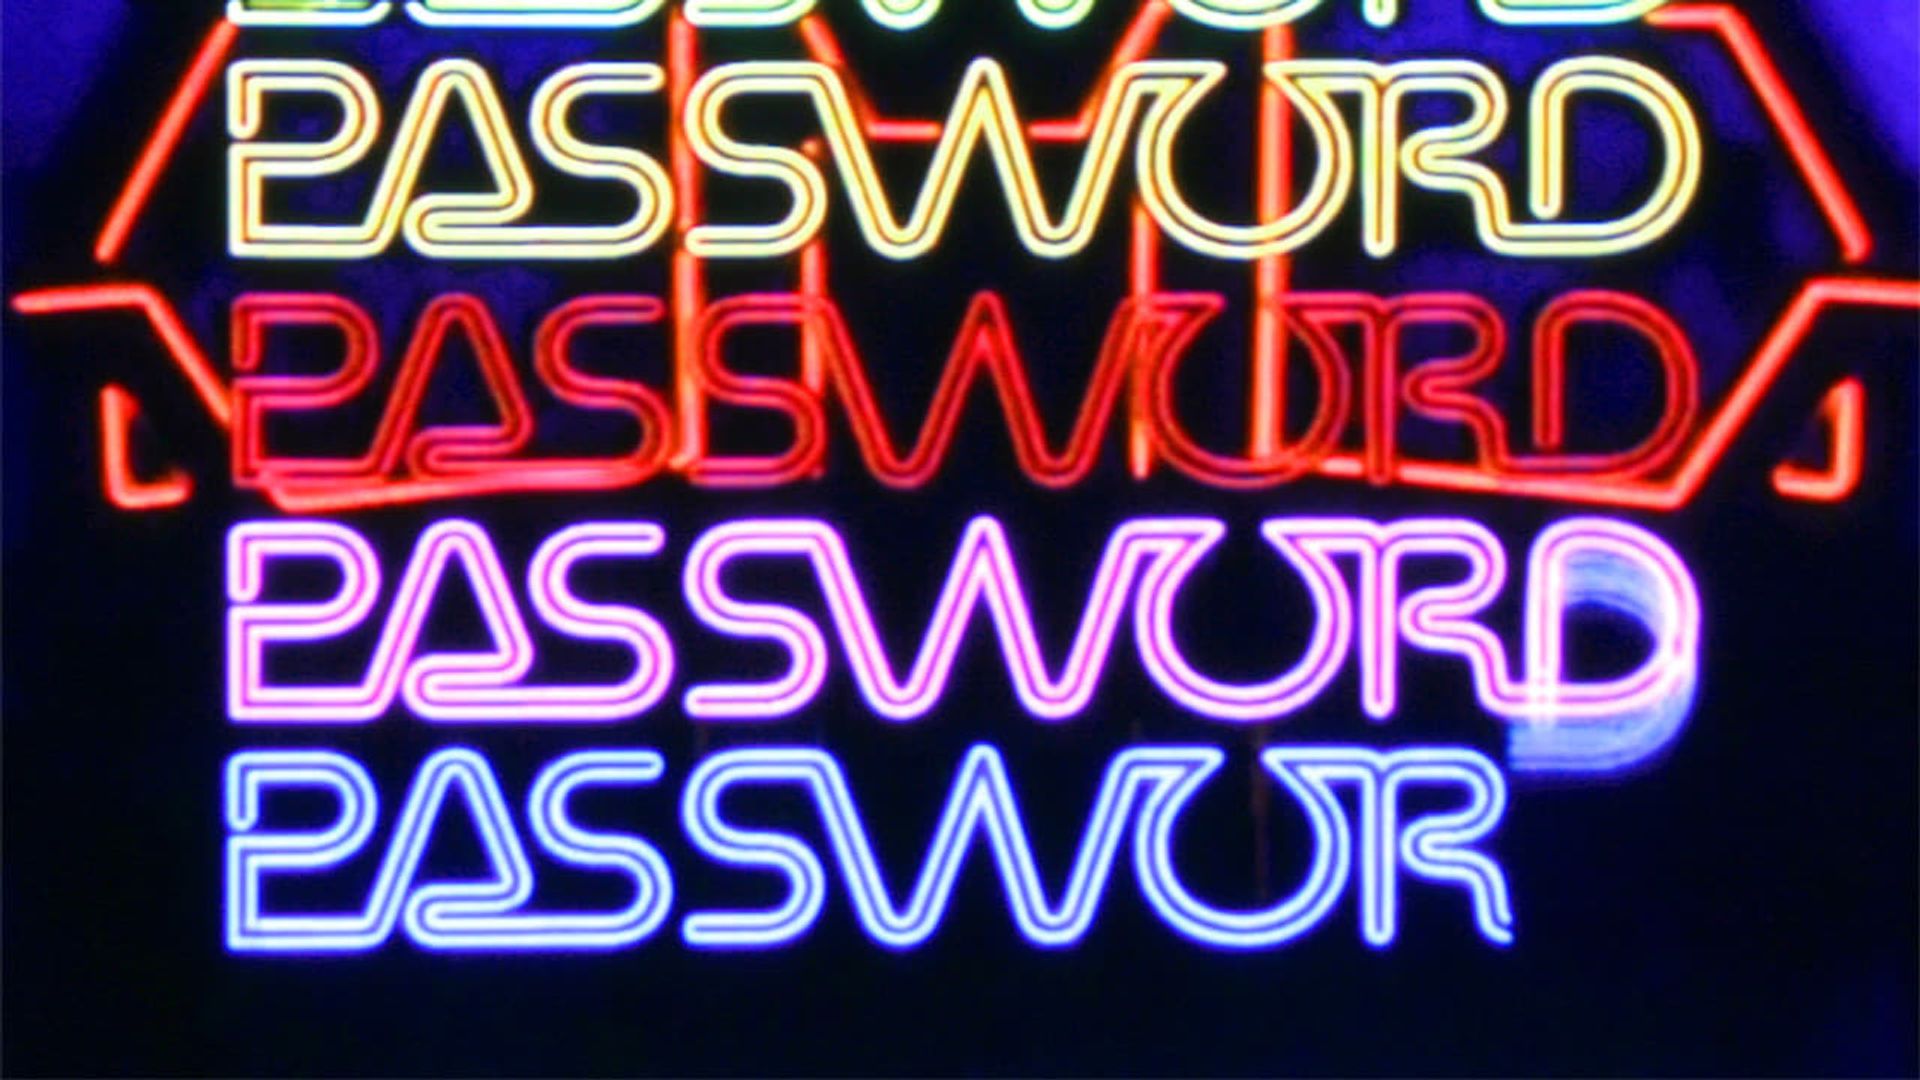 Super Password background